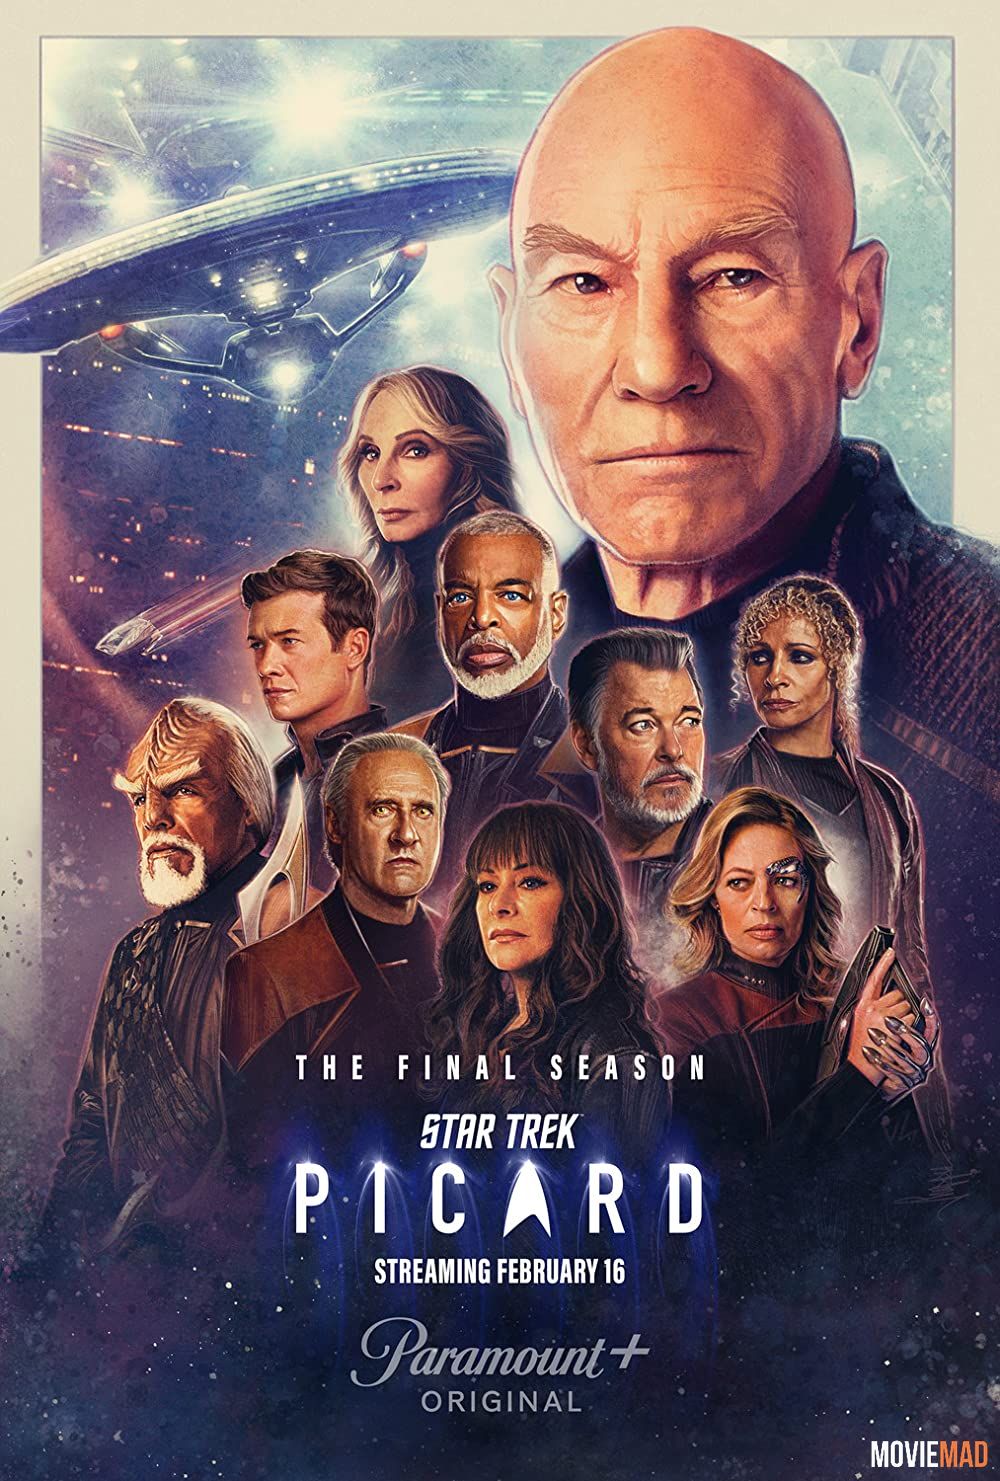 Star Trek Picard S03E01 (2022) Hindi Dubbed AMZN HDRip 1080p 720p 480p